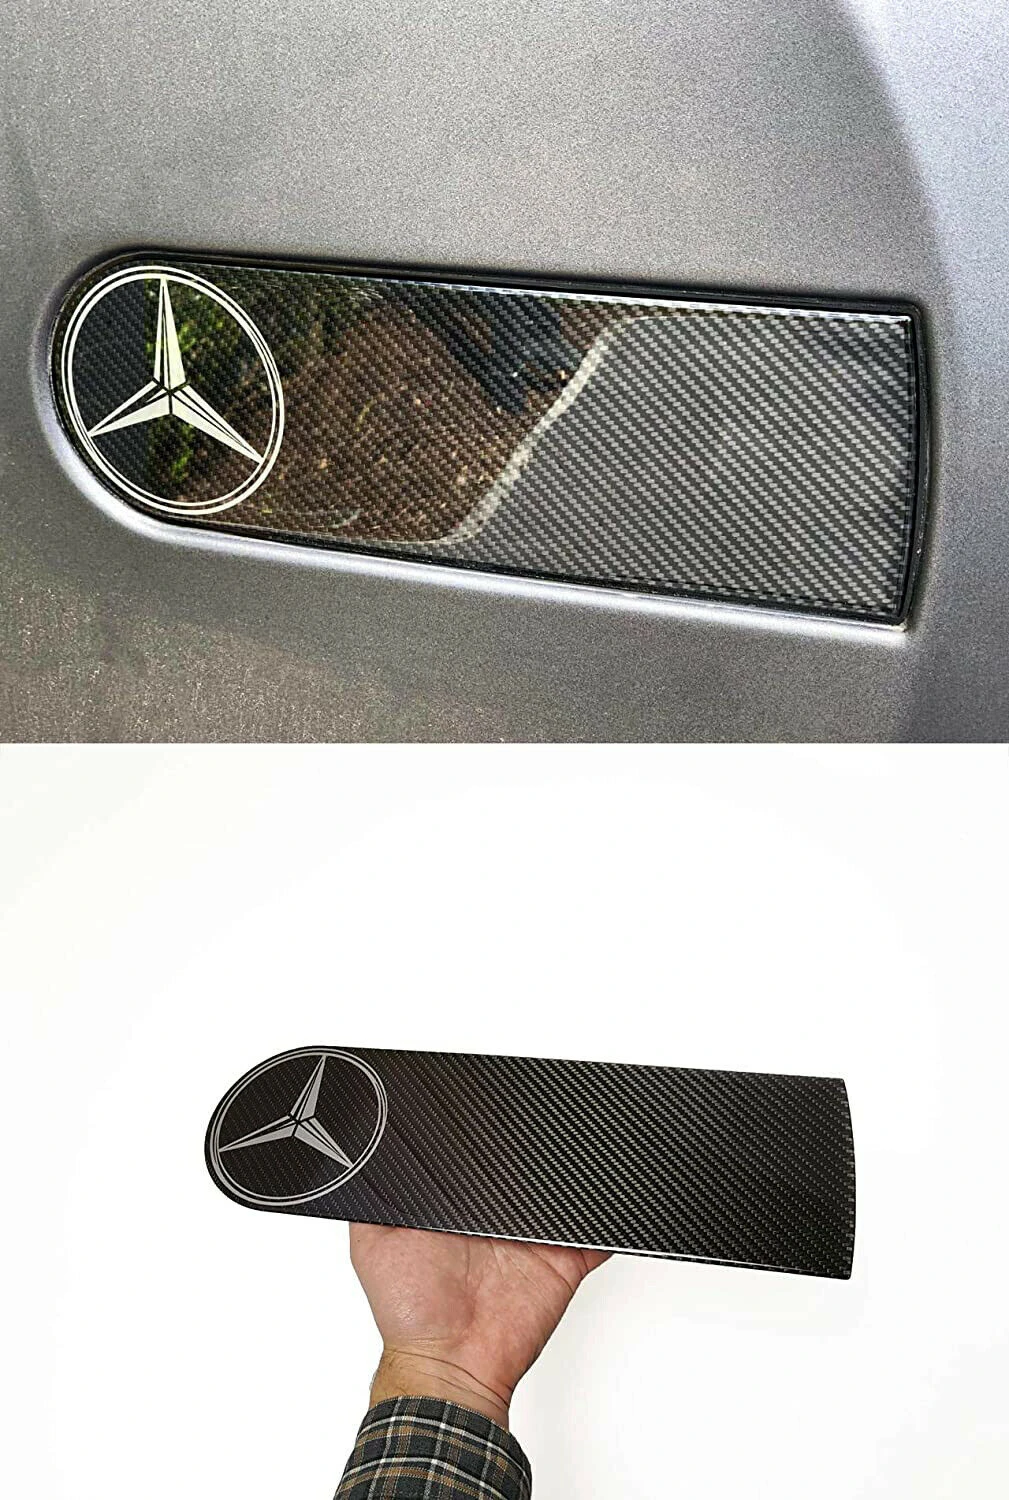 MB Star style Carbon Fiber Spare Tire Cover Emblem fits Mercedes W463 W463A G-Class